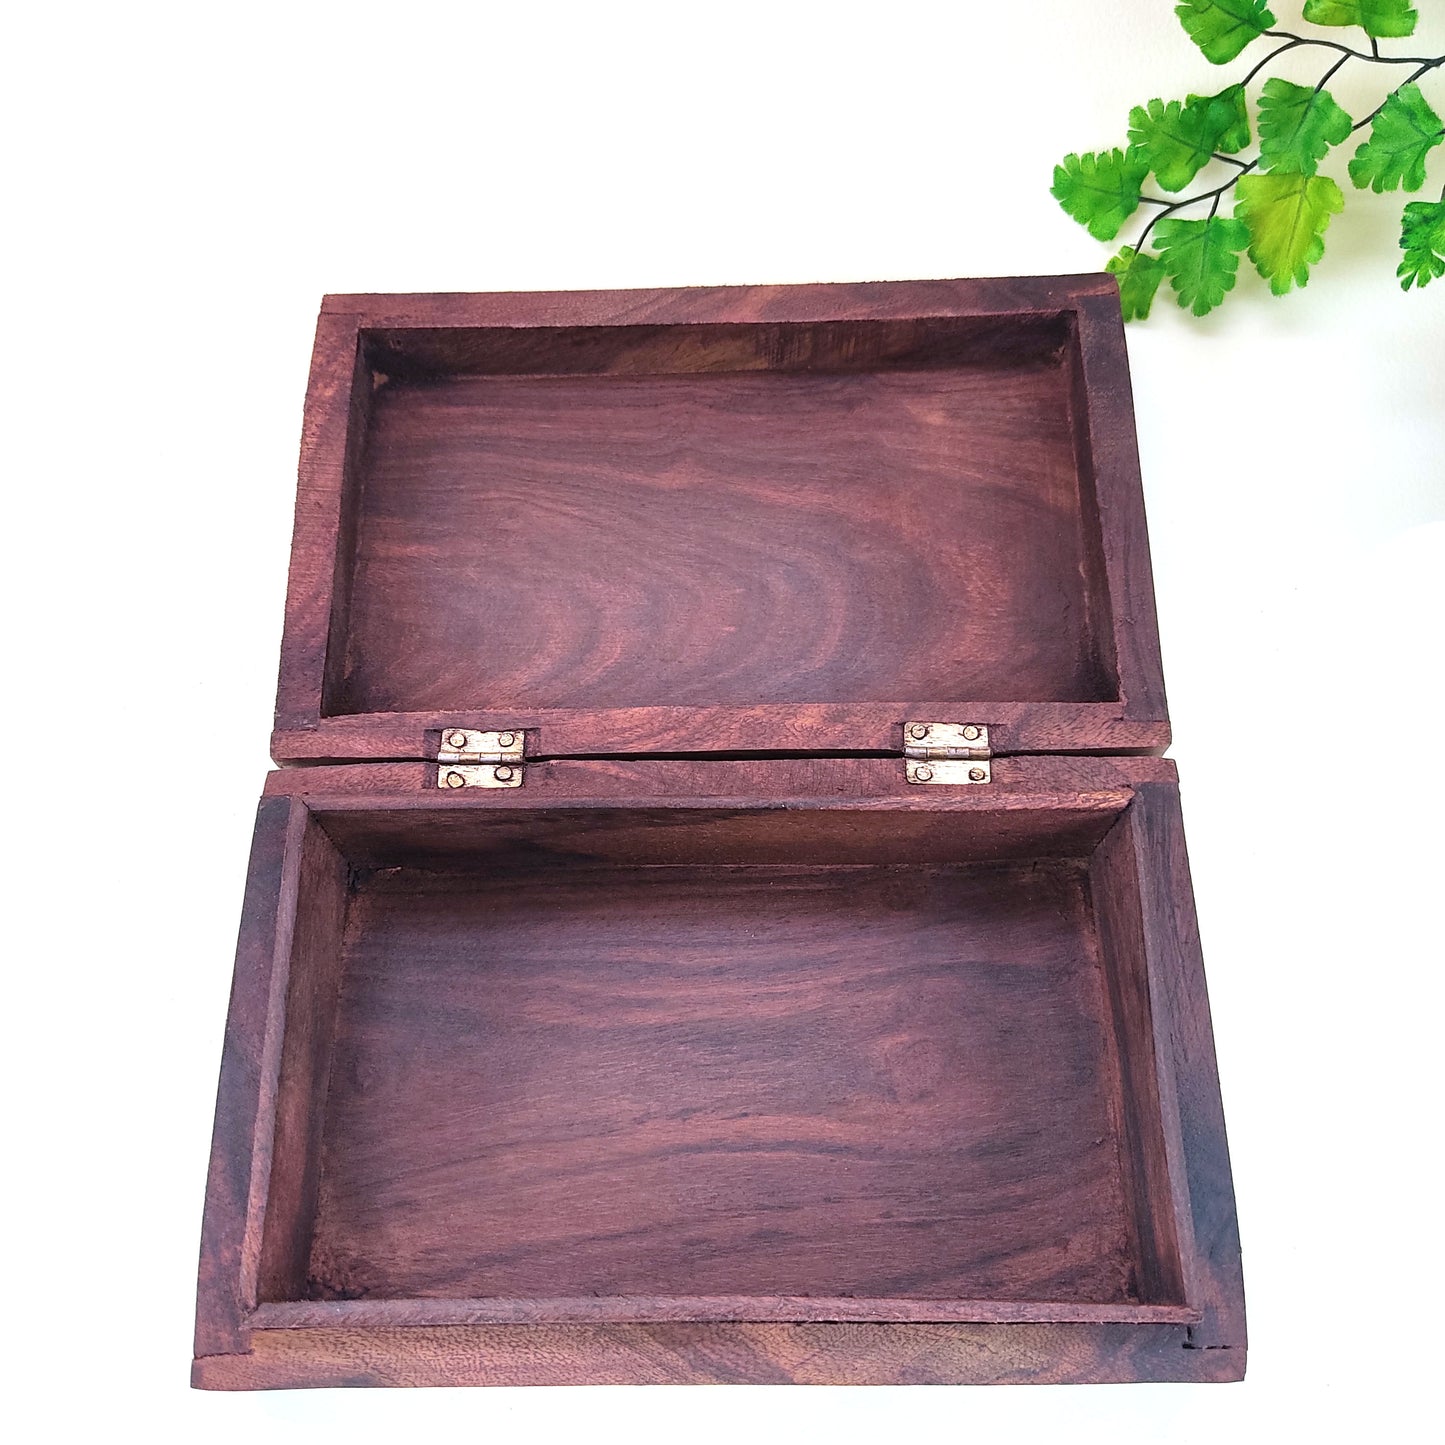 Goddess of Earth Wooden Handmade Altar Box | Goddess Jewelry Box 5"x 8"